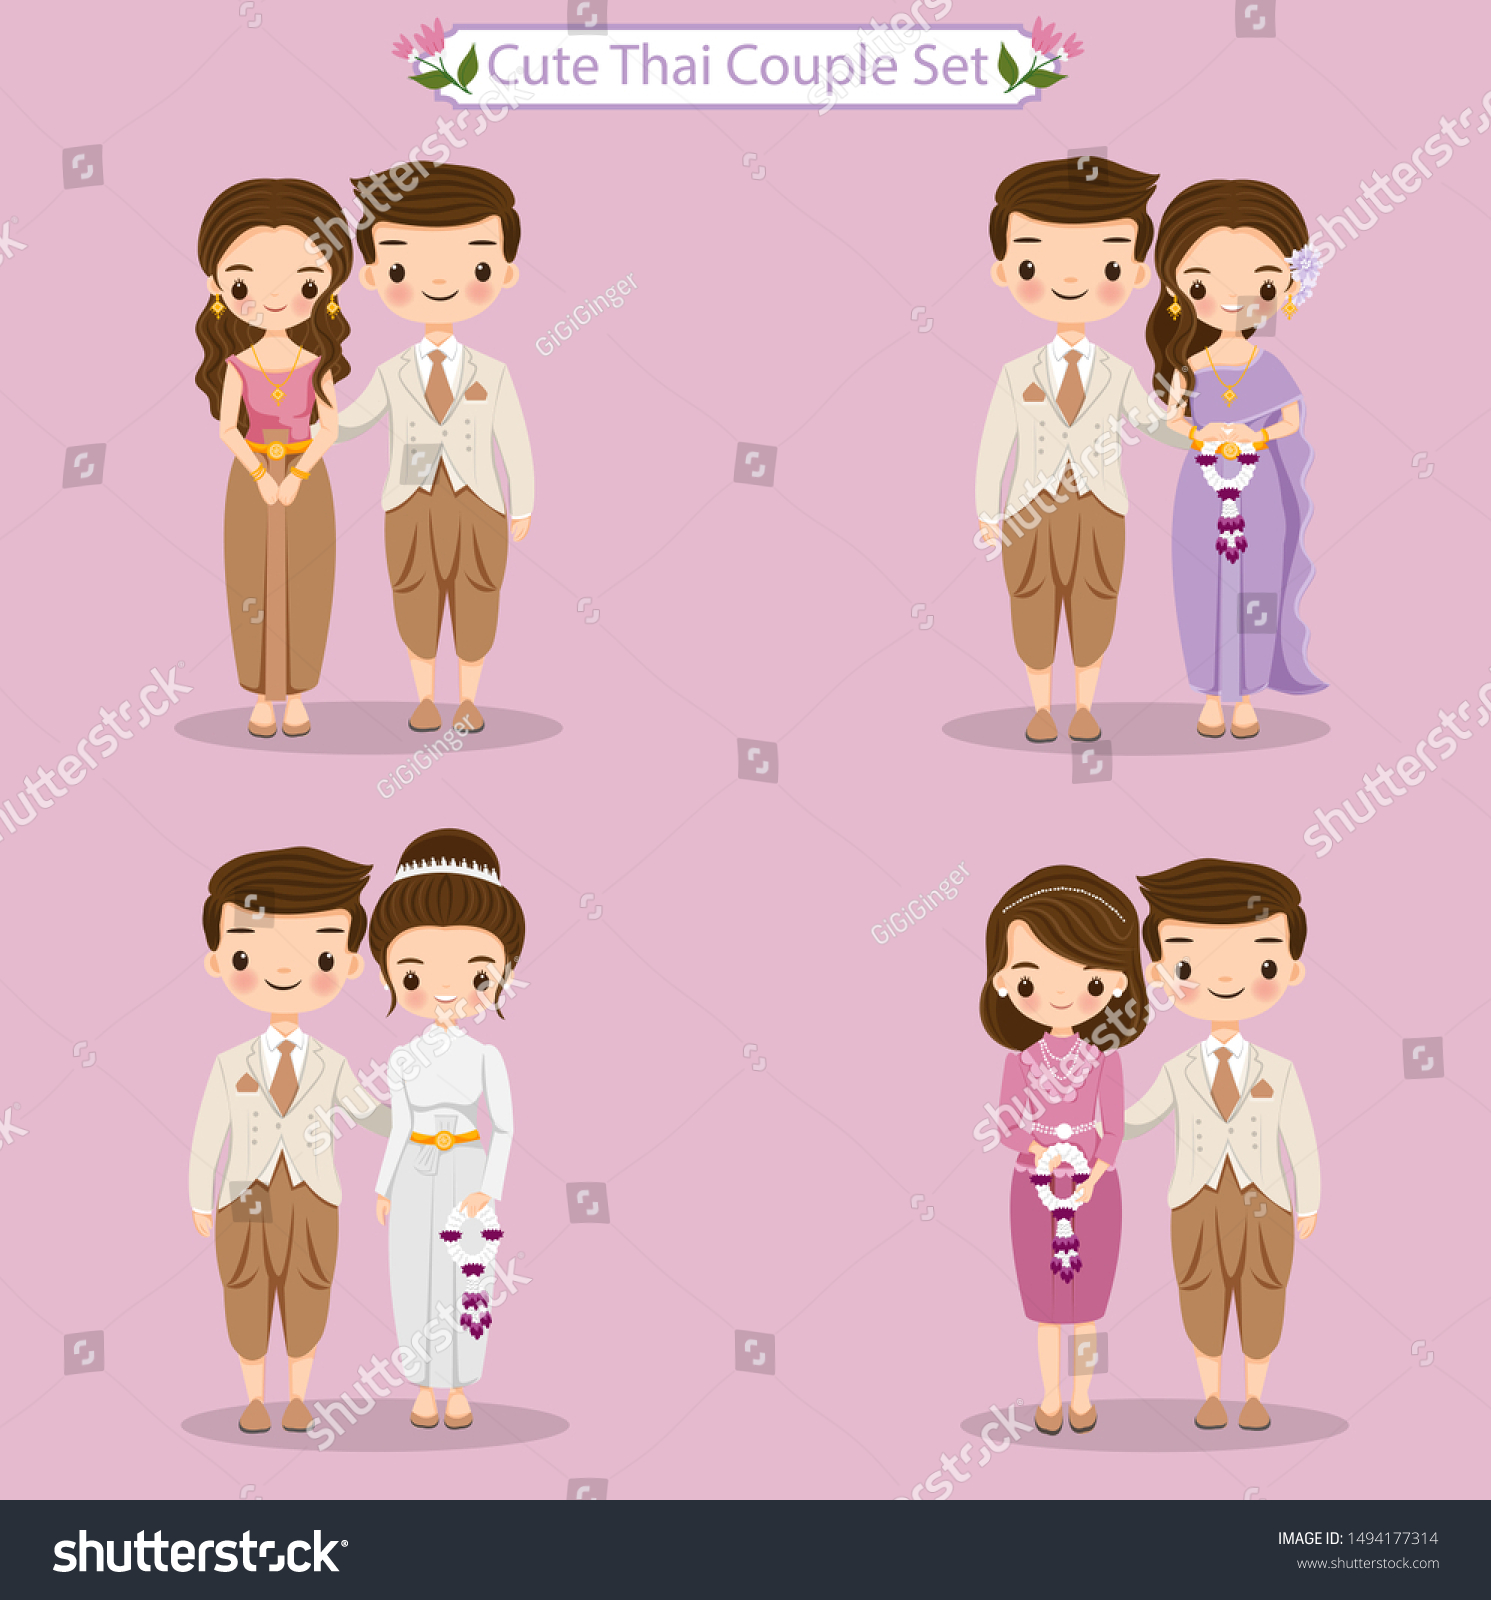 https://image.shutterstock.com/z/stock-vector-cute-thai-bride-and-groom-in-traditional-dress-for-wedding-invitation-card-design-1494177314.jpg